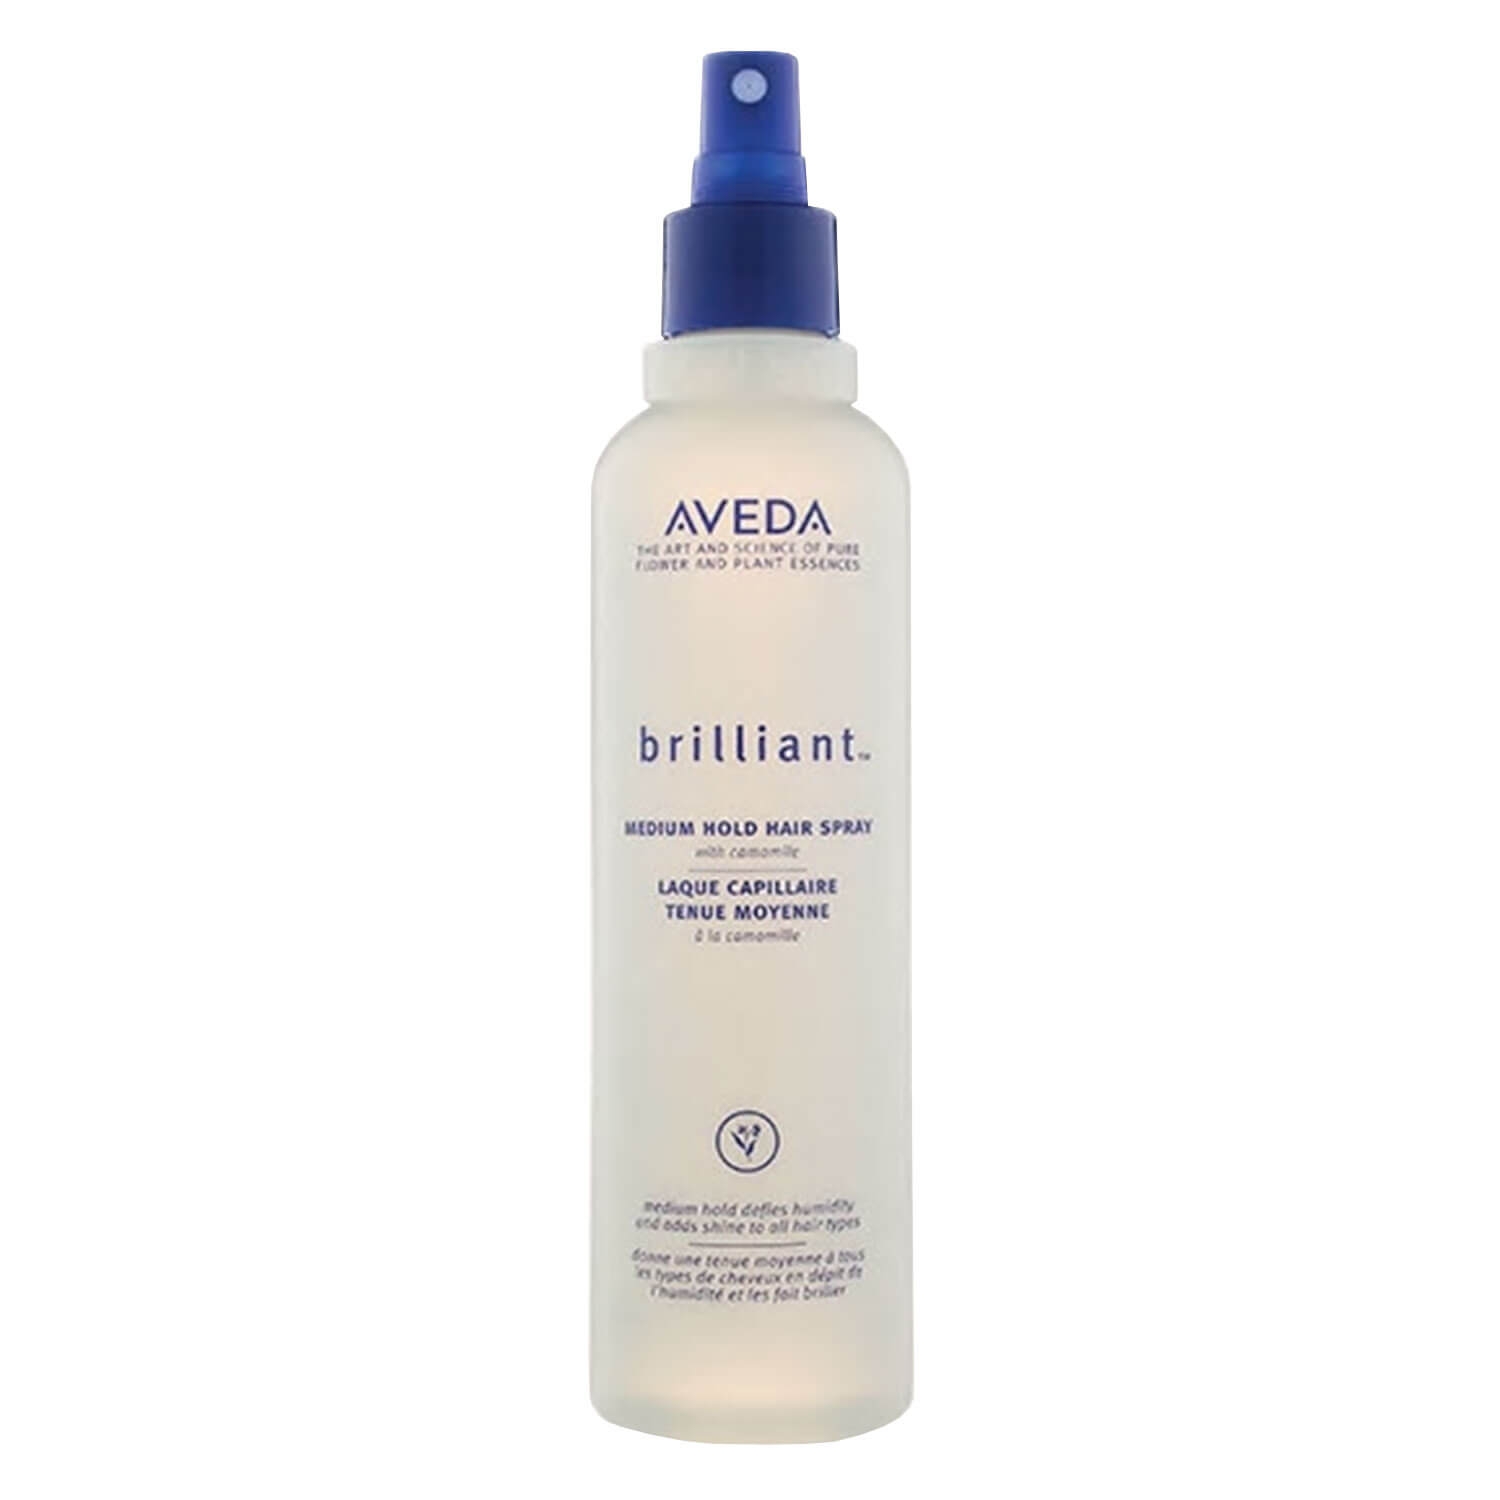 Product image from brilliant - medium hold hair spray